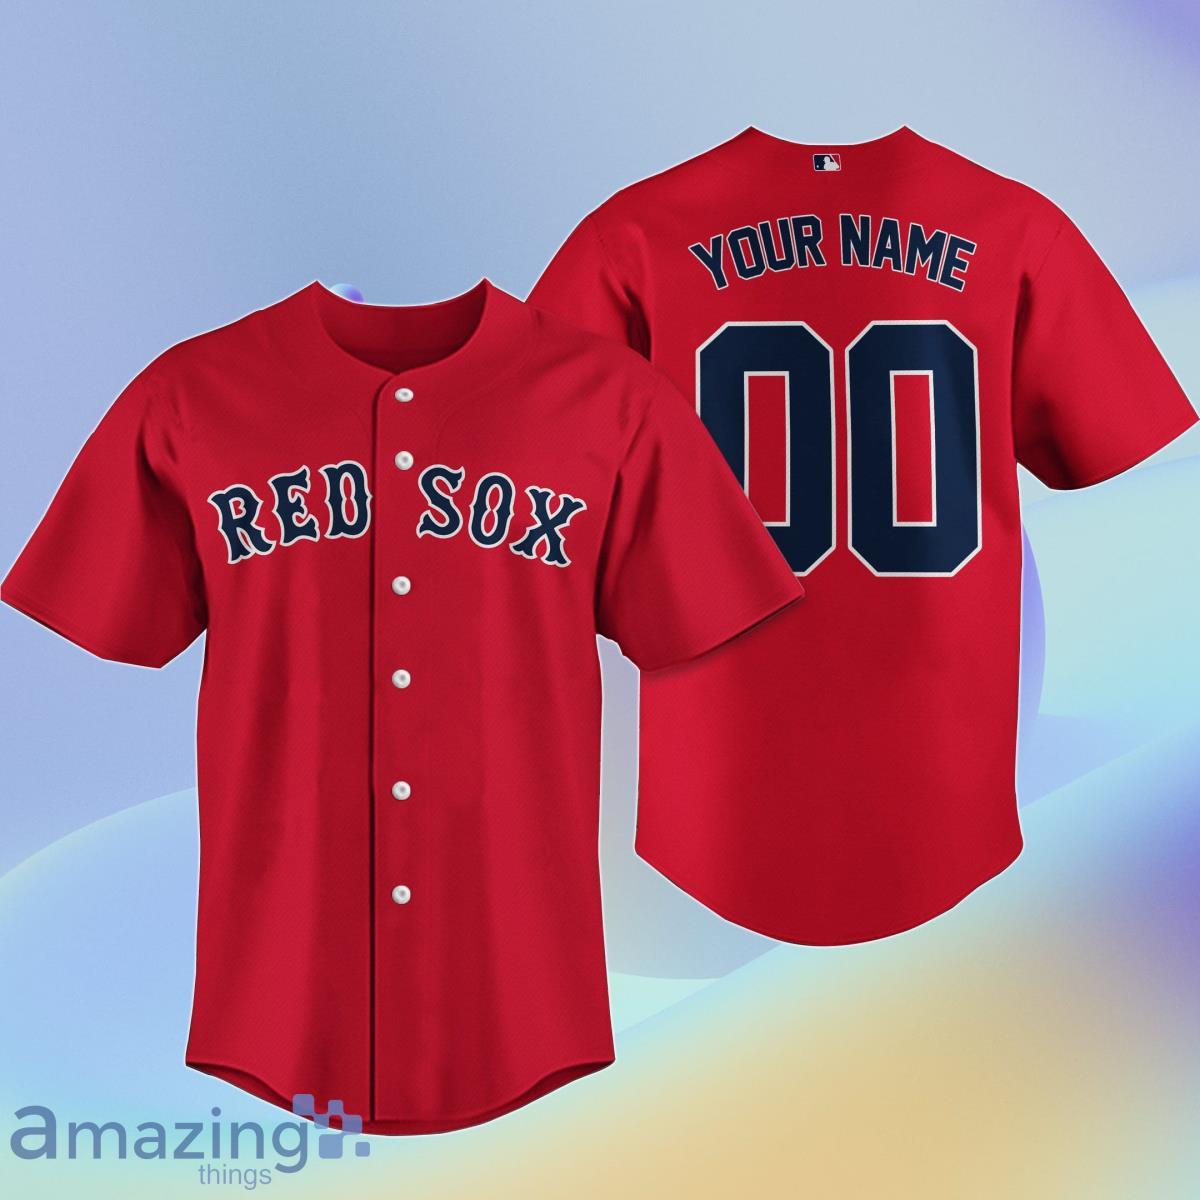 Boston Red Sox Personalized Women's Jersey